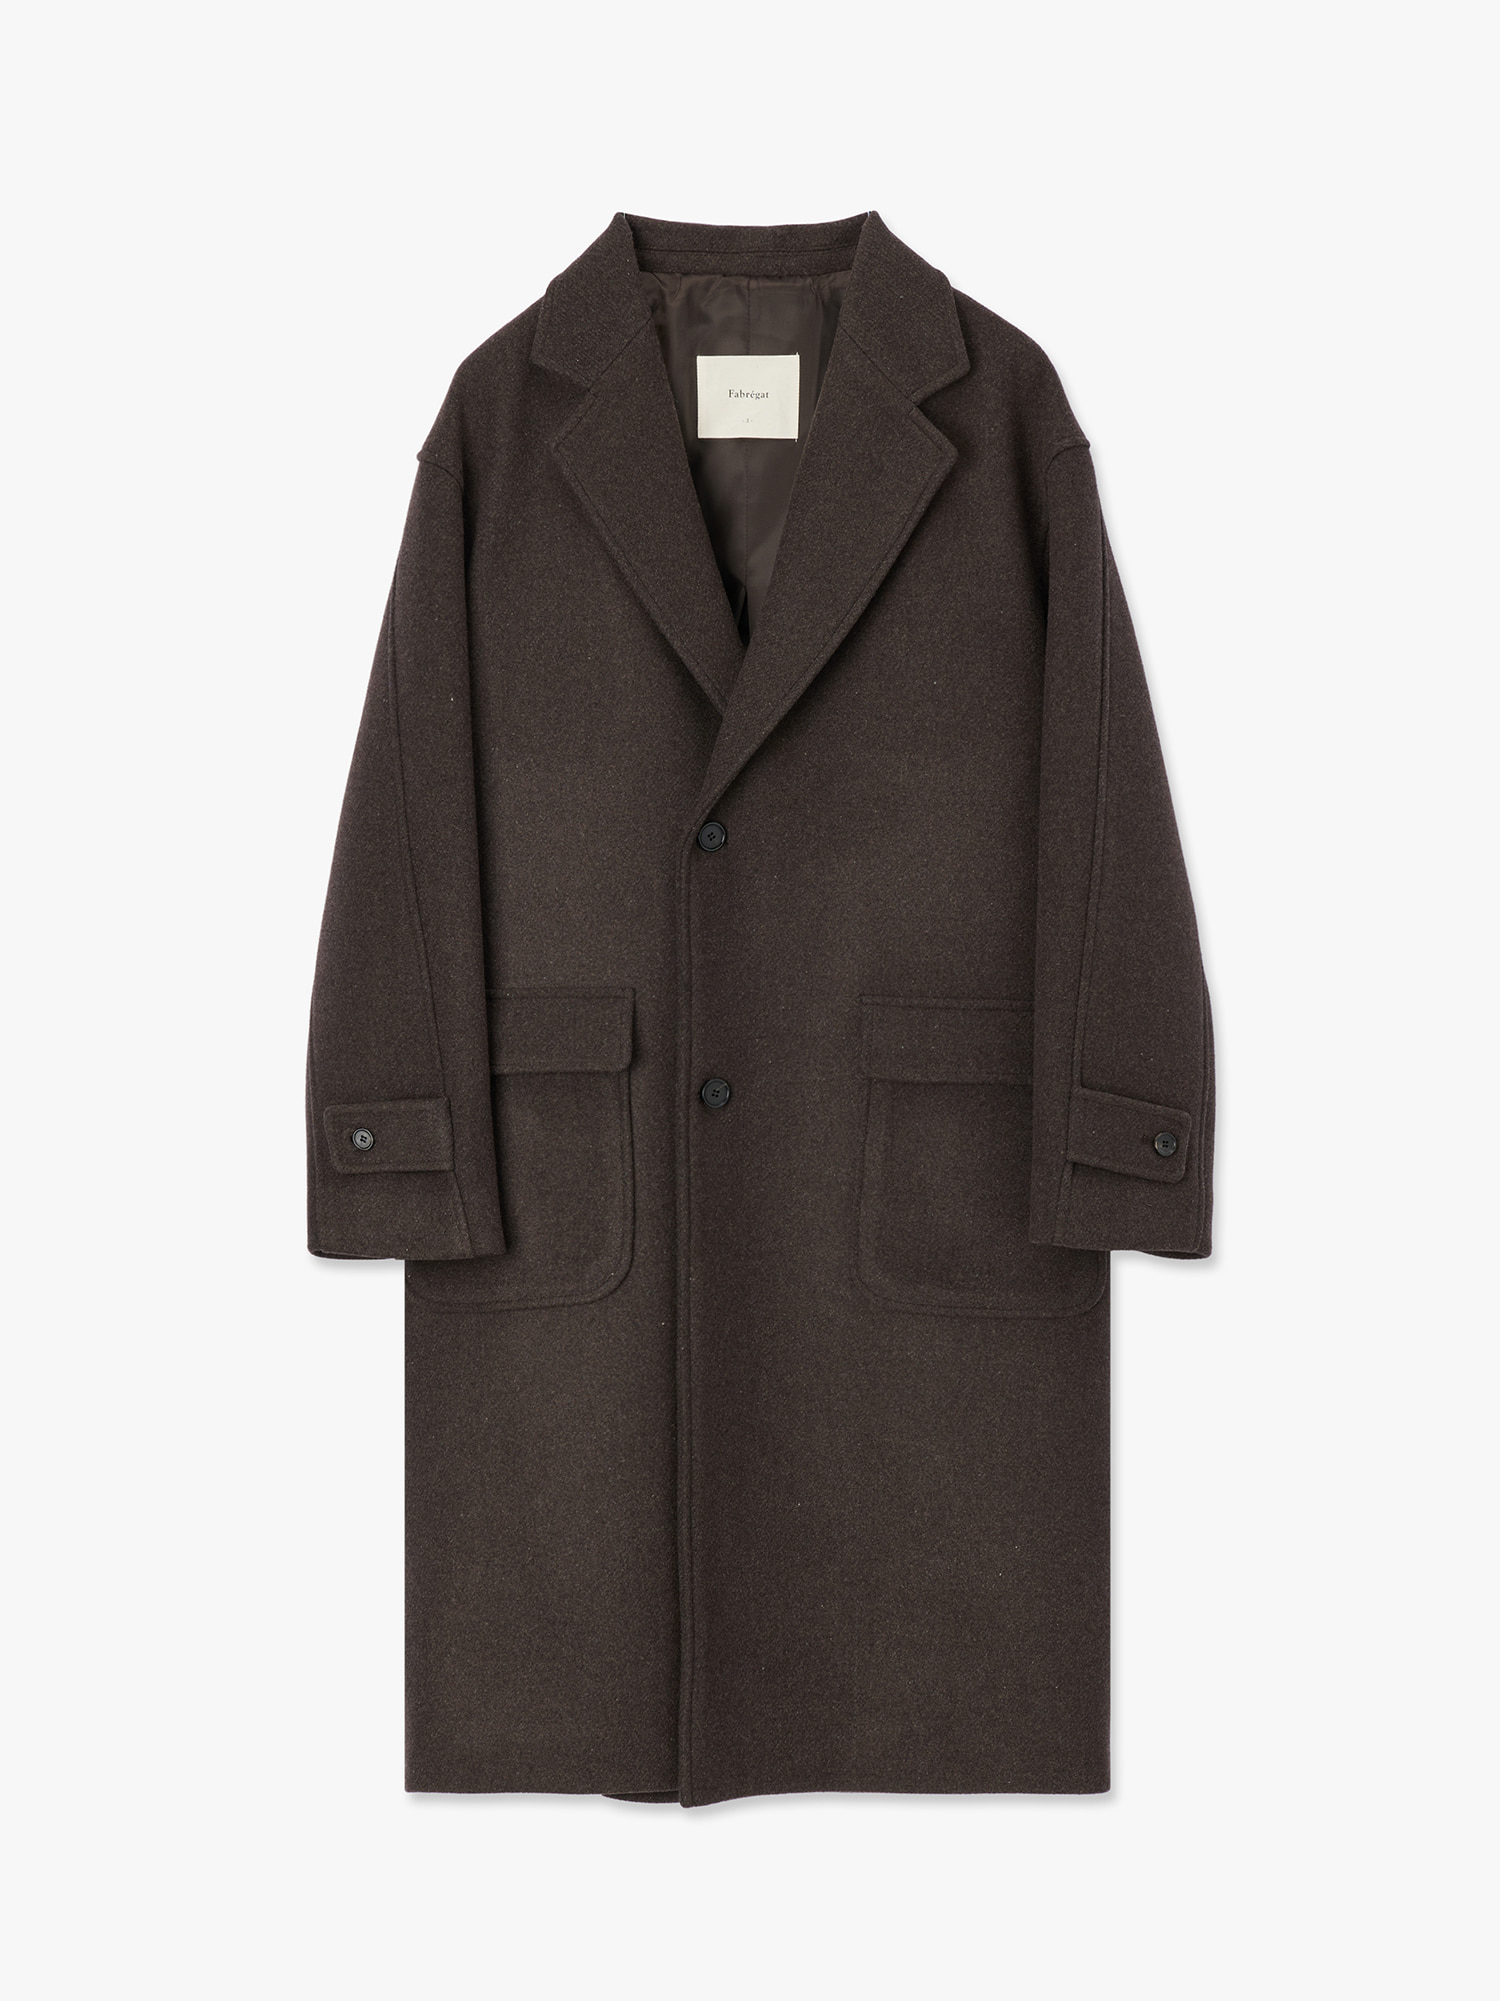 Wool Blend Out Pocket Over-Fit Coat (Brown)